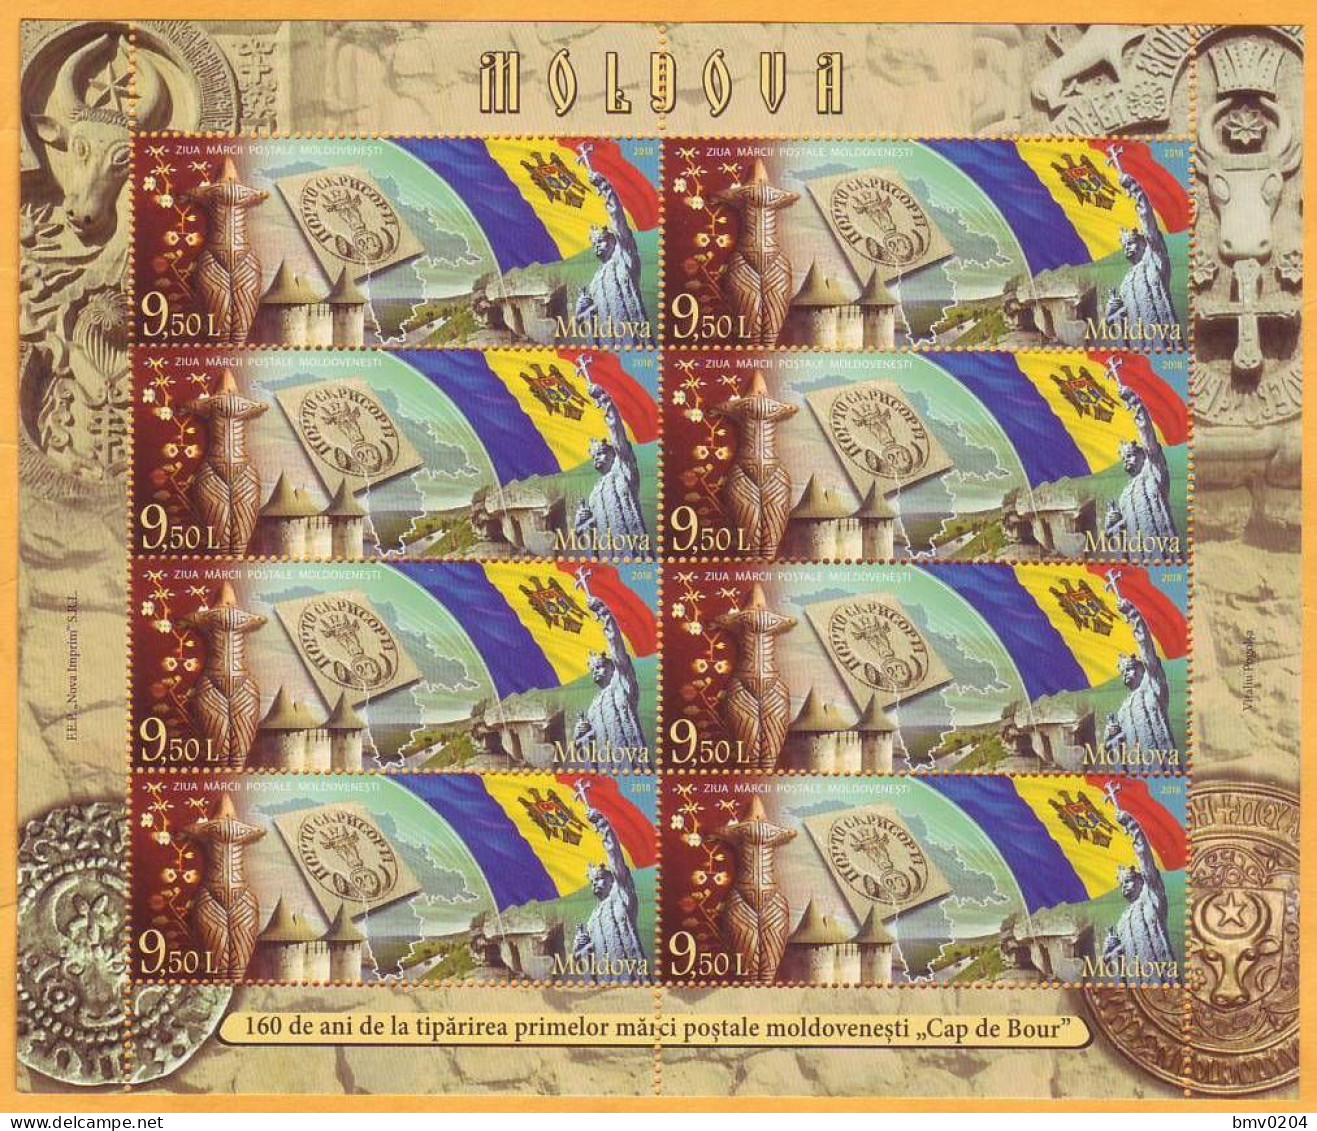 2018 Moldova Moldavie Moldau 160 Years  "Moldovan Postmark Day" Transnistria Romania  Sheetlet Mint - Dag Van De Postzegel